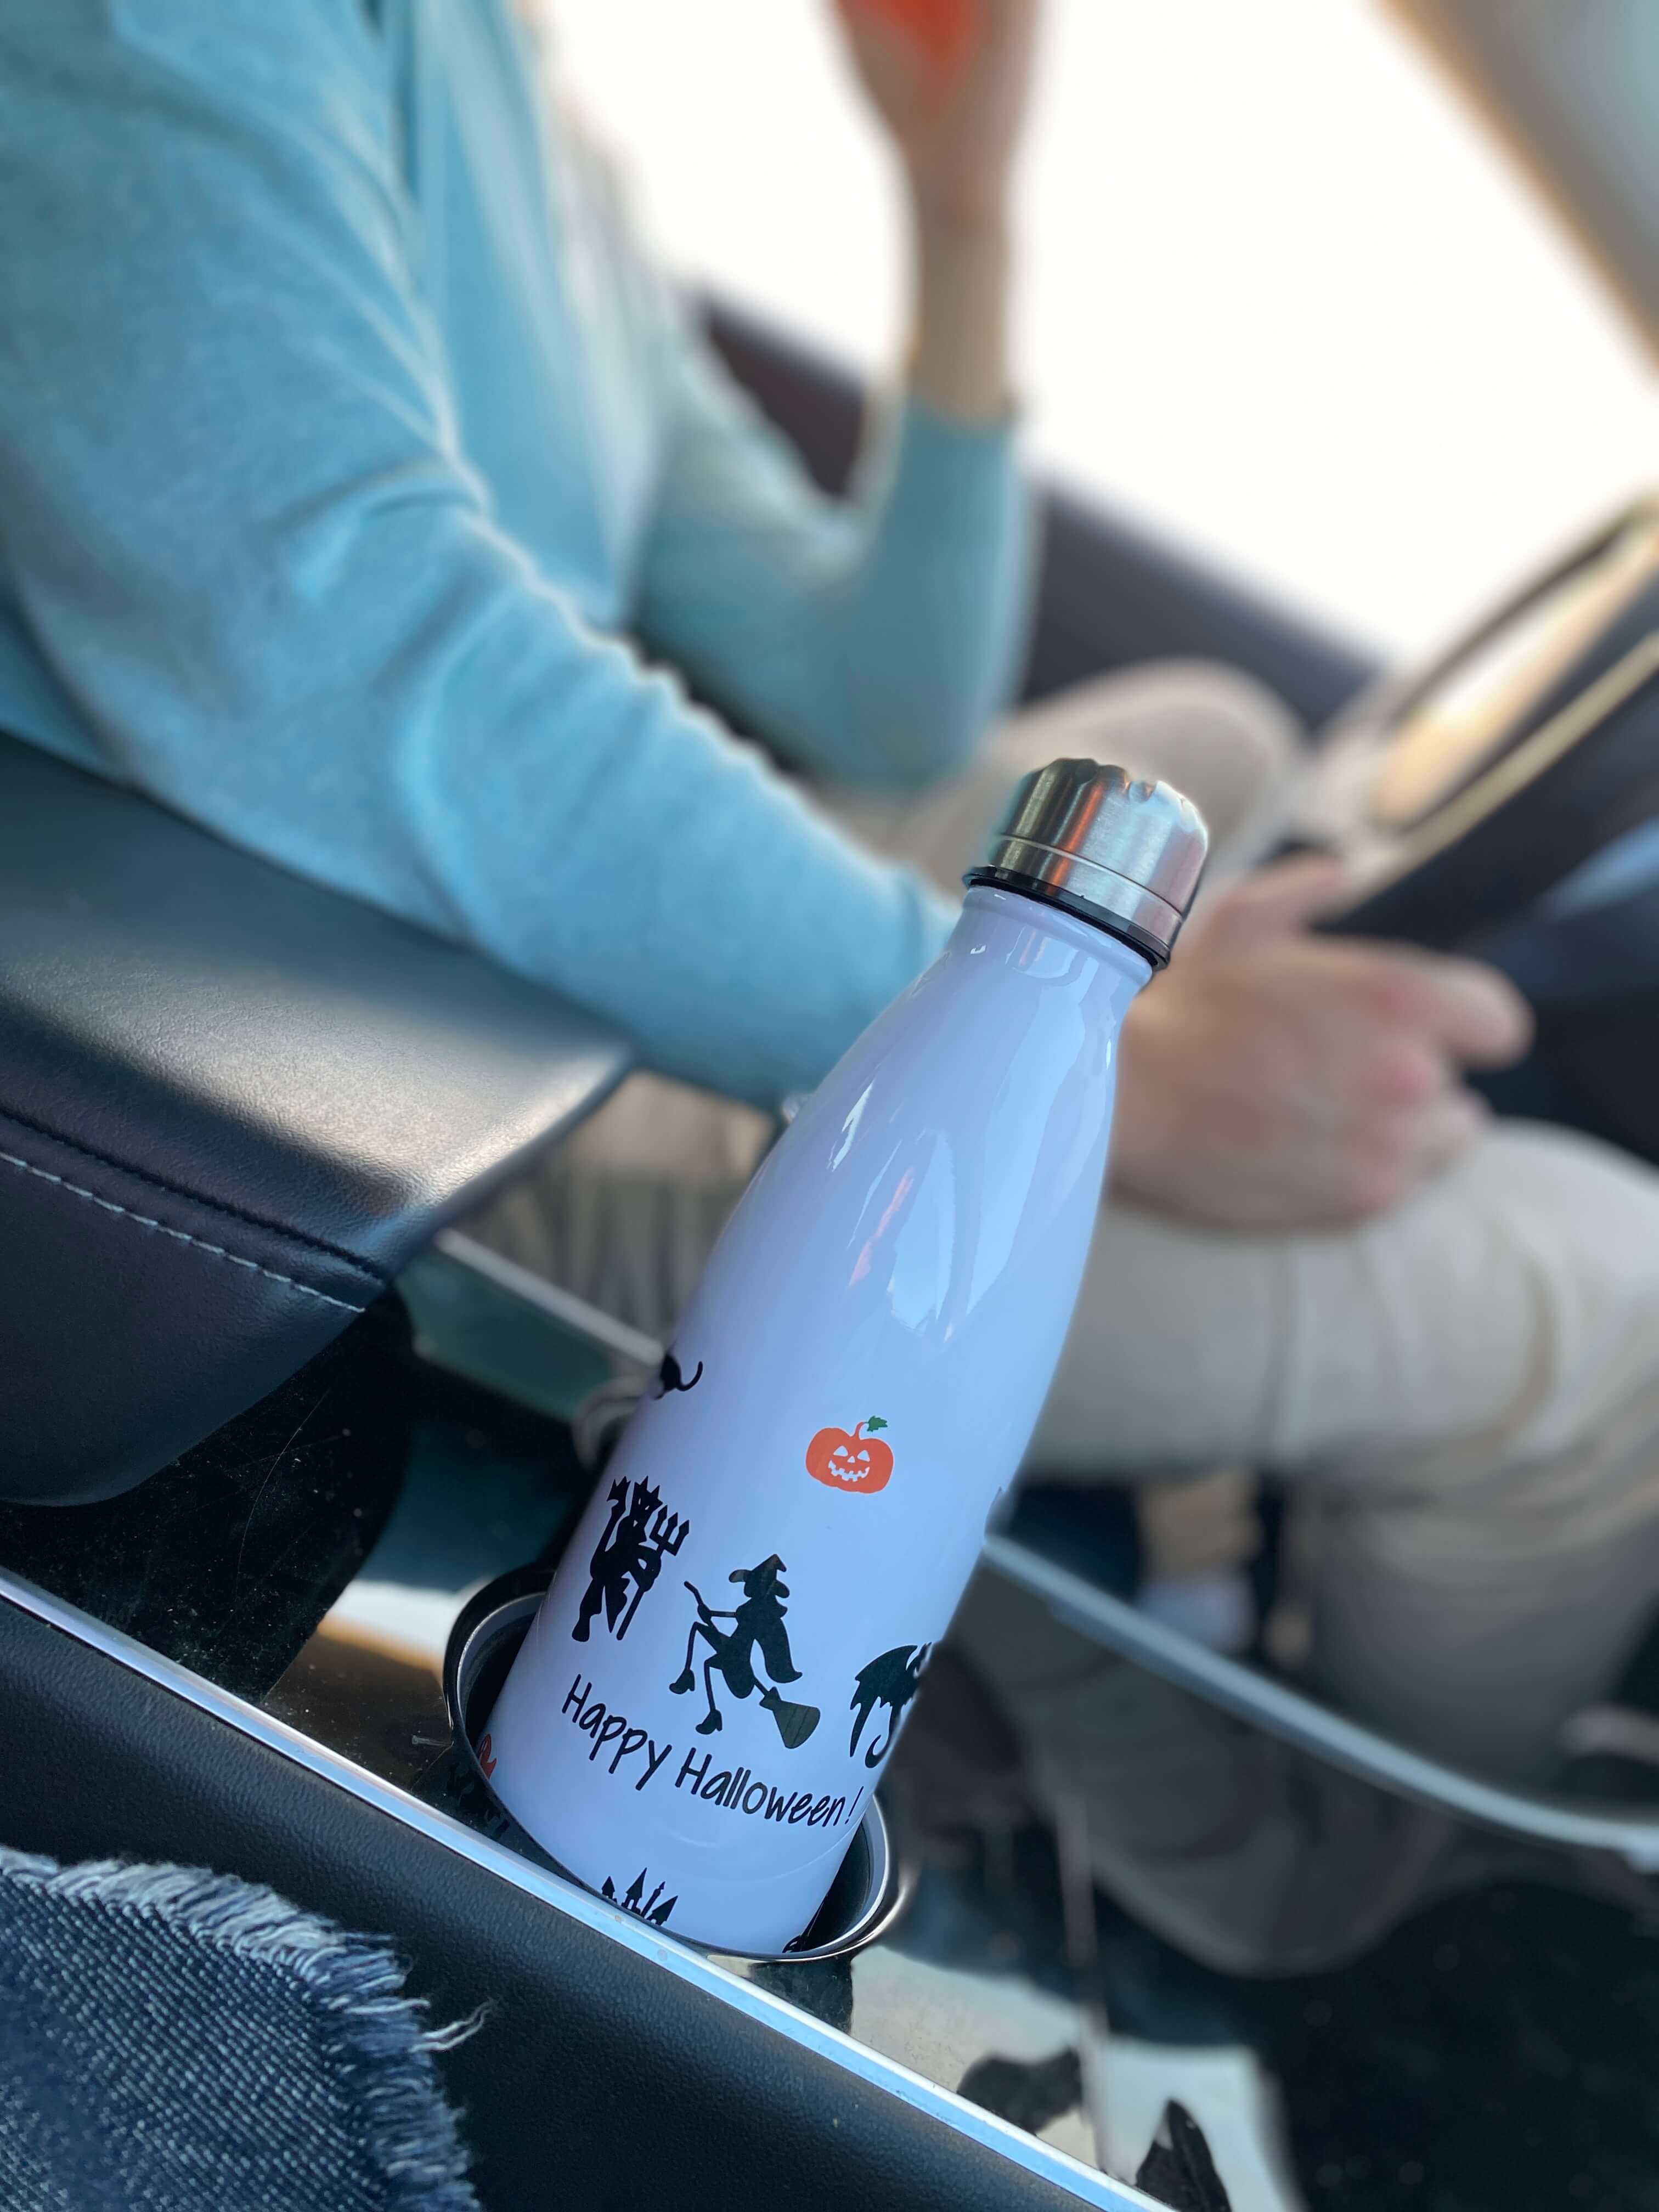 Personalized water bottle